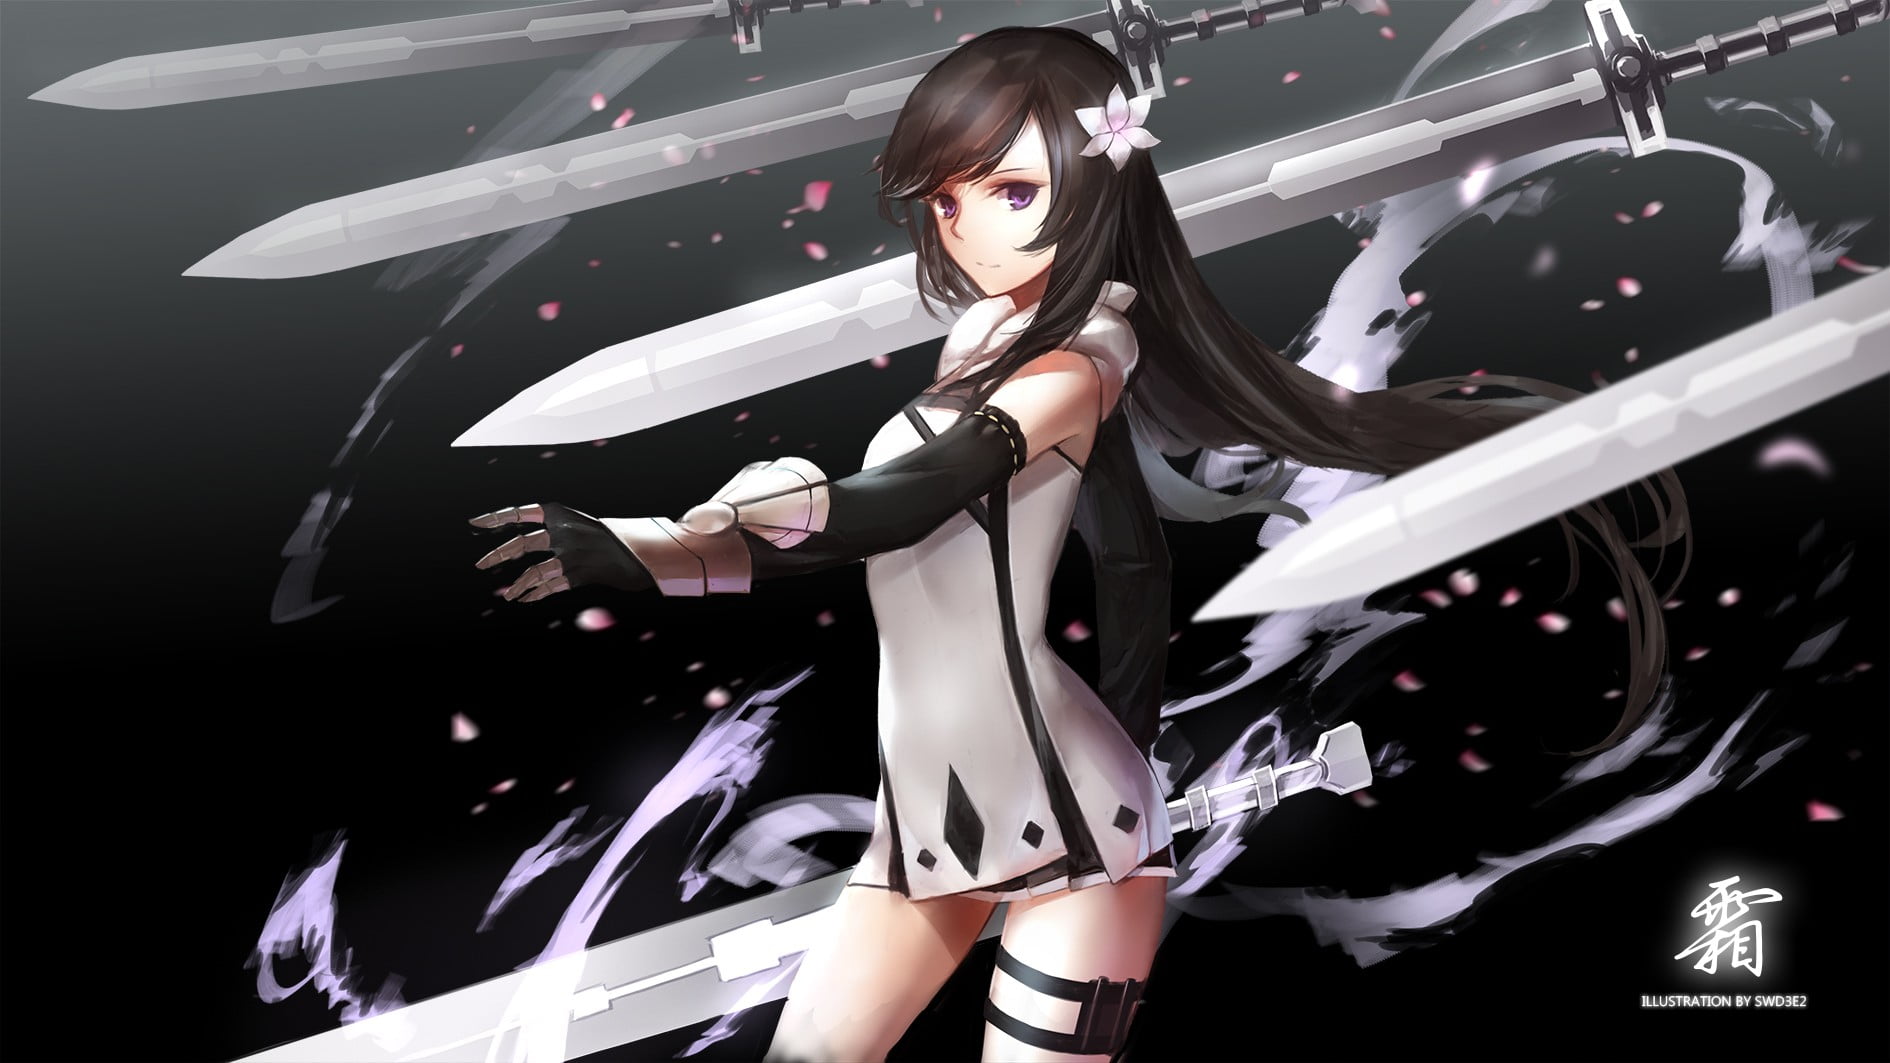 Anime Girl Character With Sword Wallpaper Hd Wallpaper Wallpaper